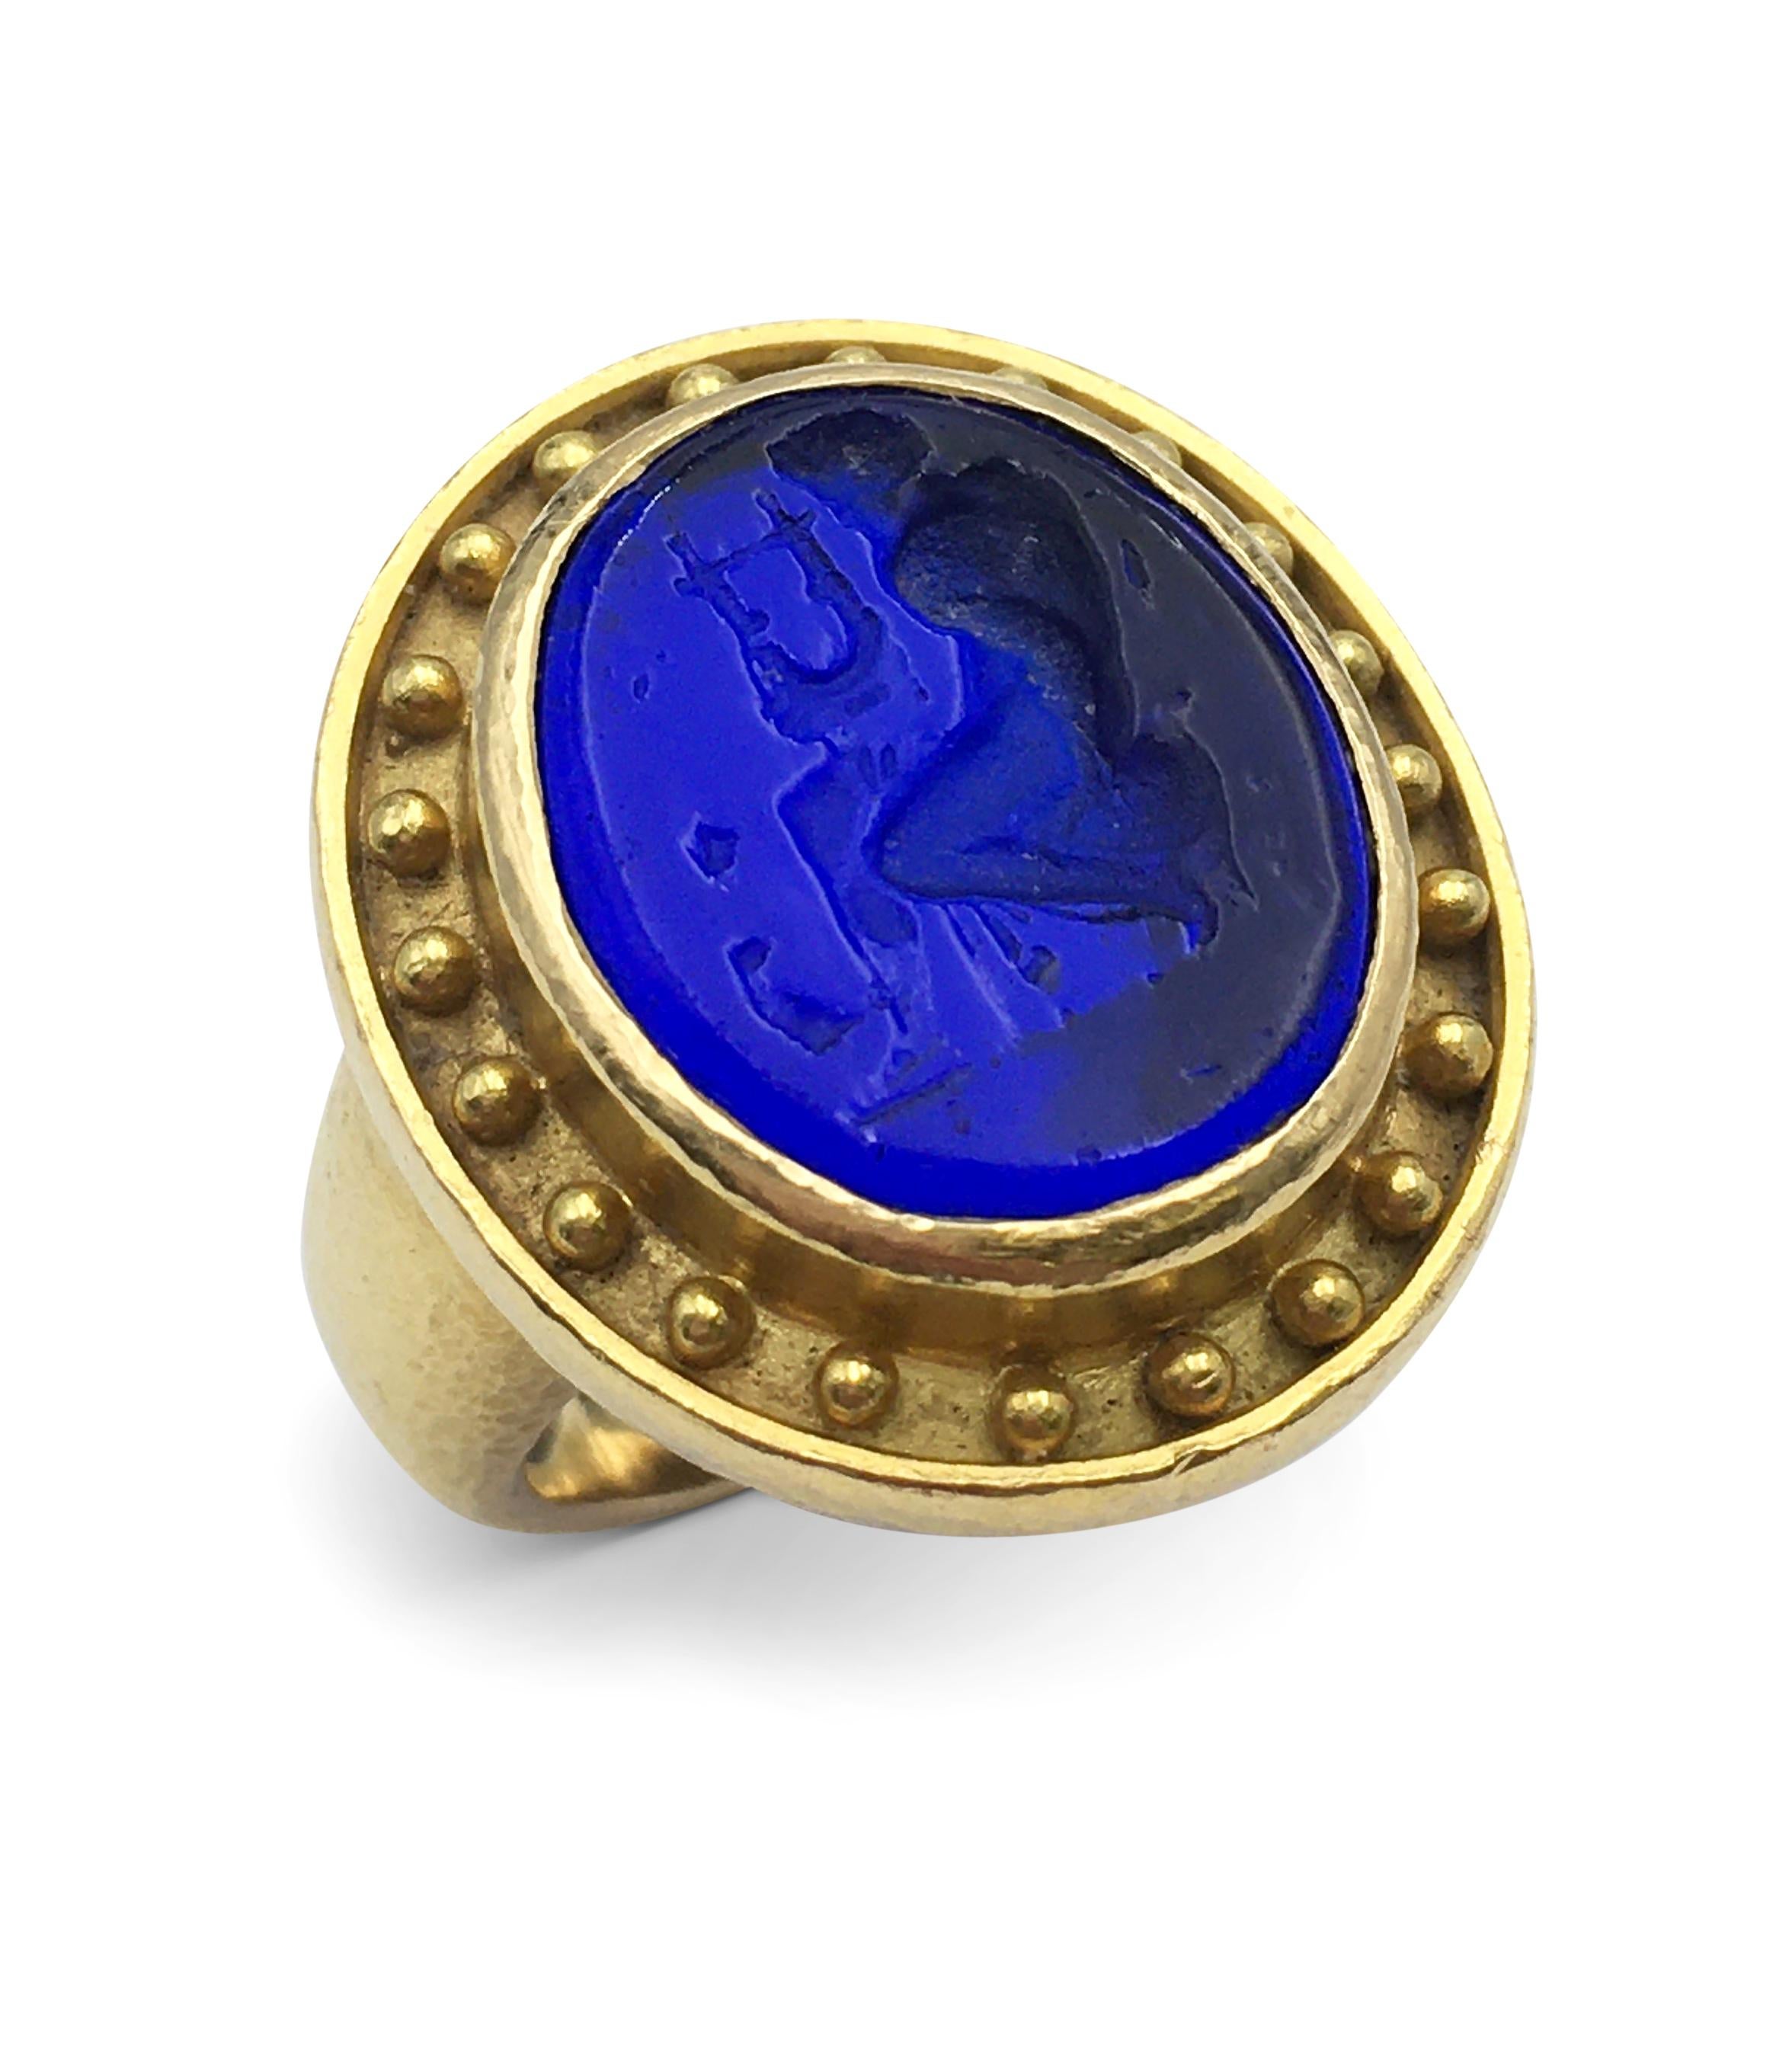 Elizabeth Locke Gold and Carved Venetian Glass Intaglio Ring 1